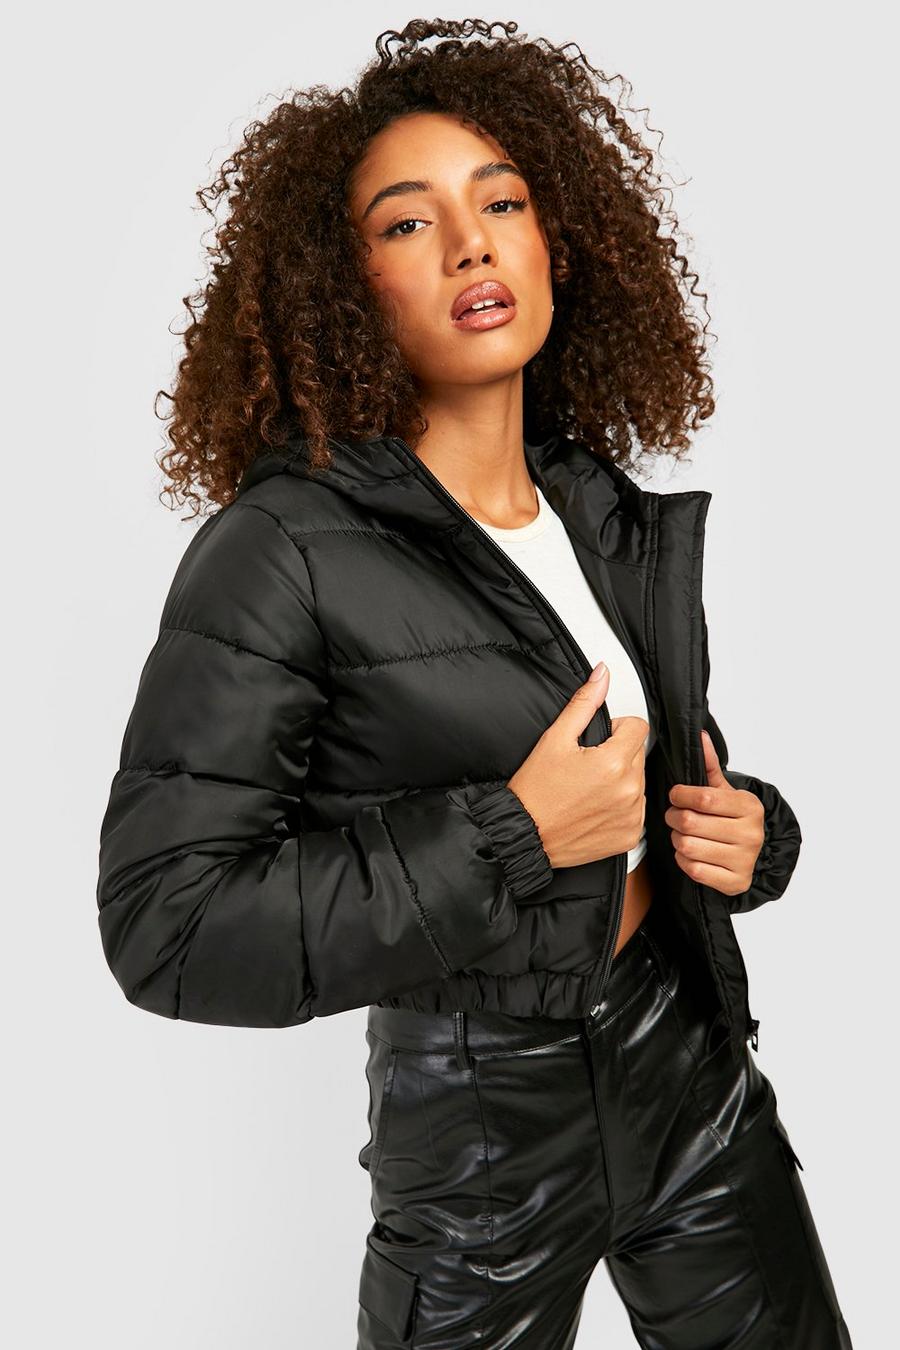 Women's Tall Hooded Puffer Jacket Black